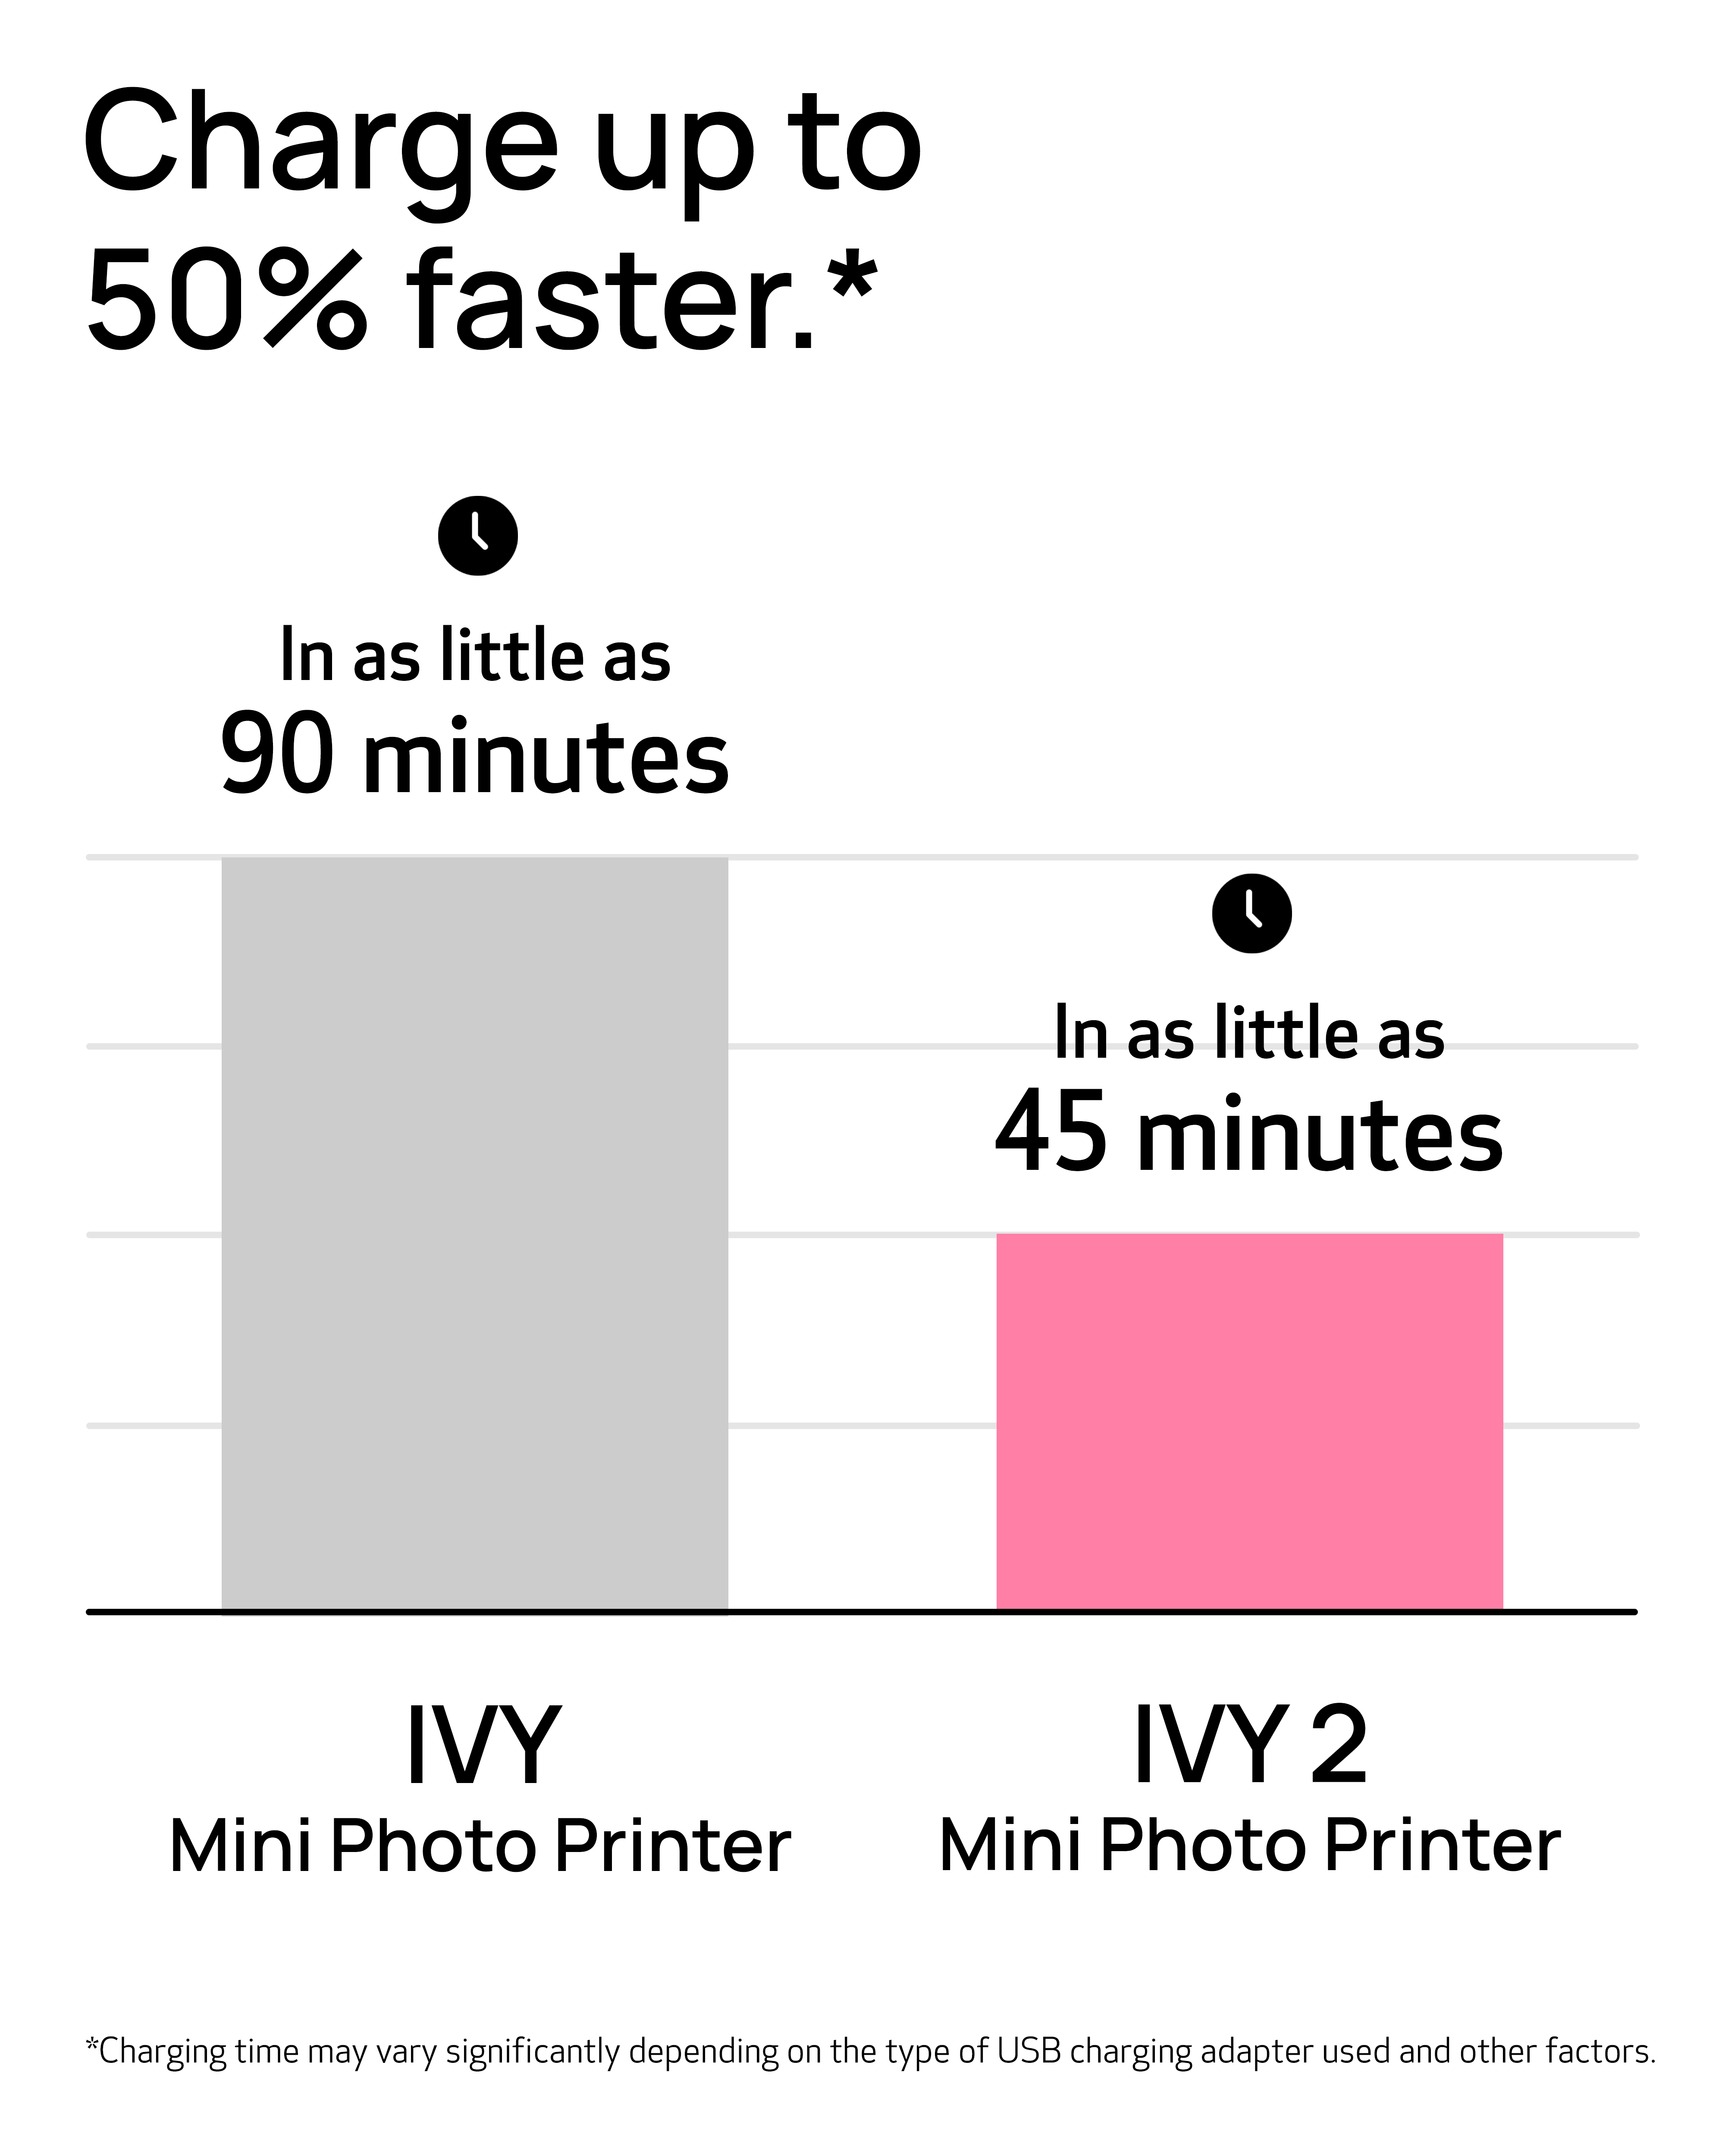 IVY 2 Mini Photo Printer - Pure White - image 5 of 6